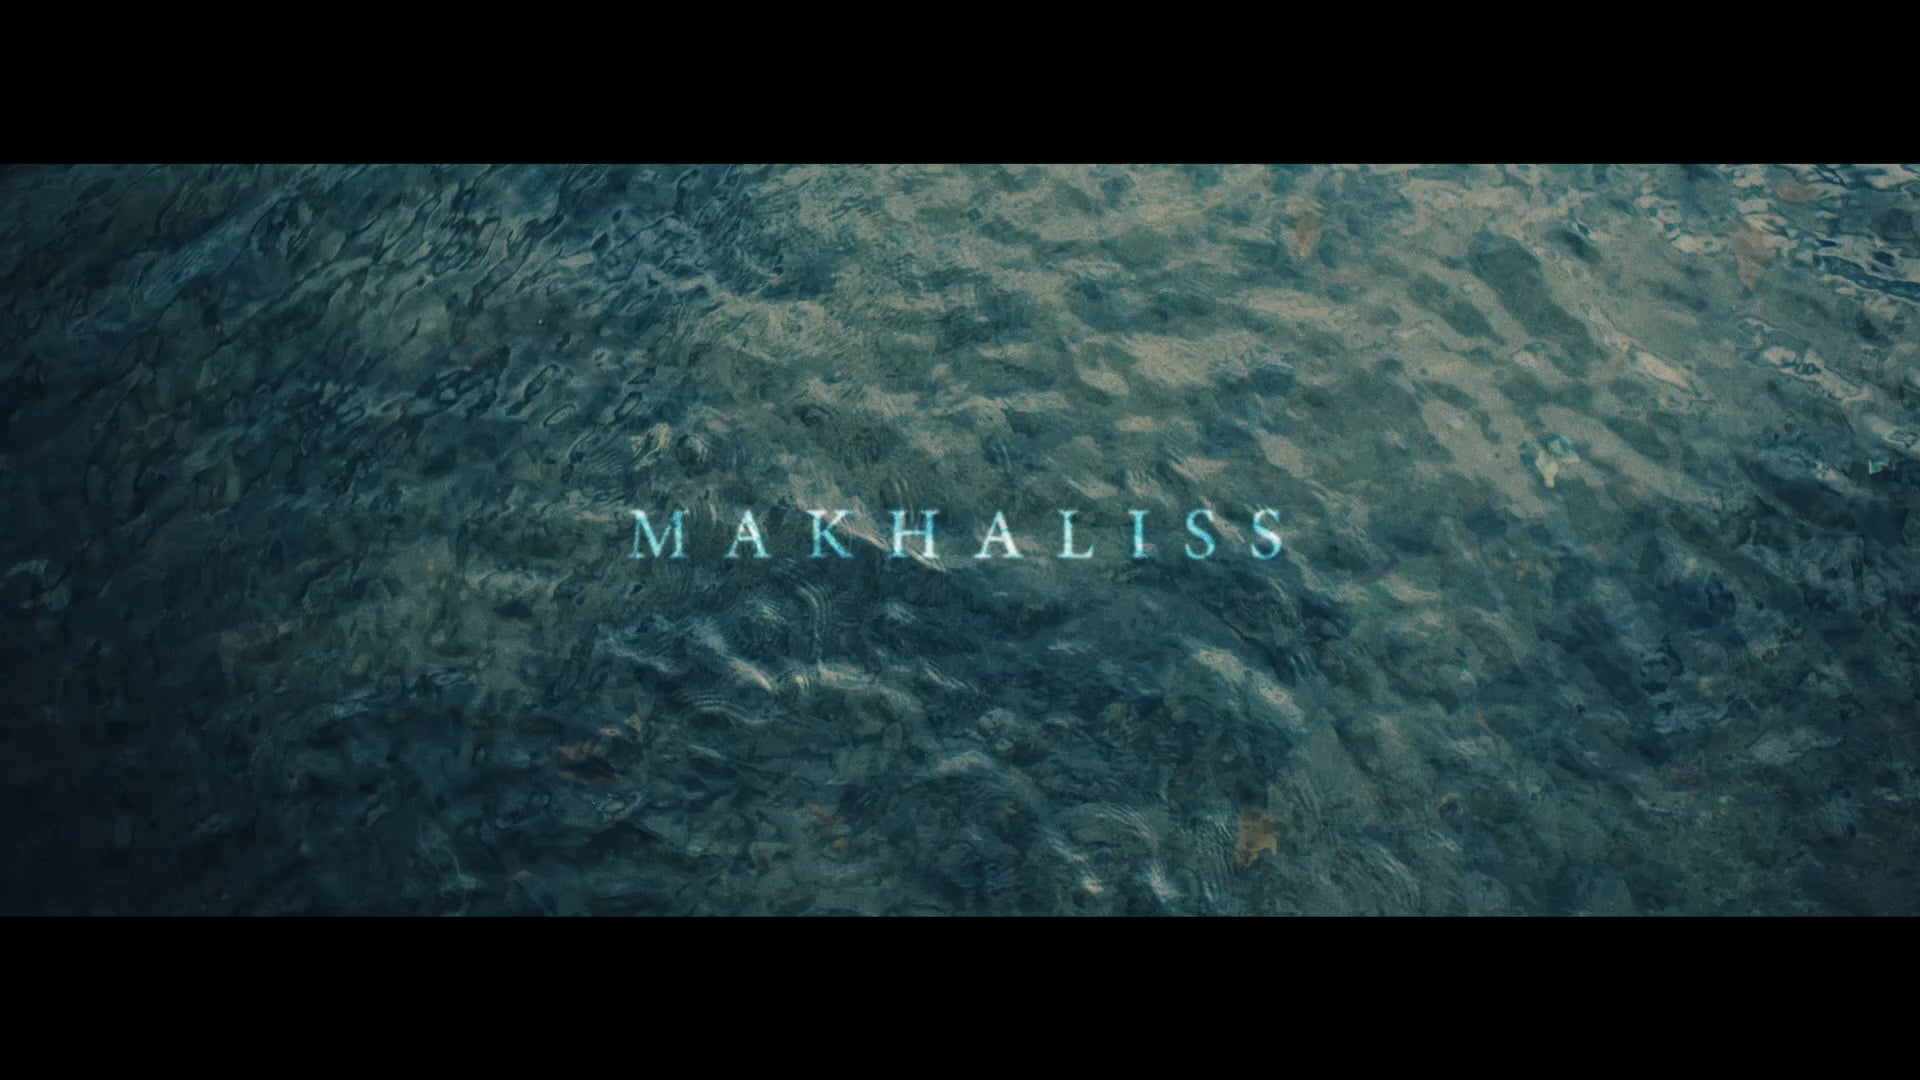 MAKHALISS - Official trailer